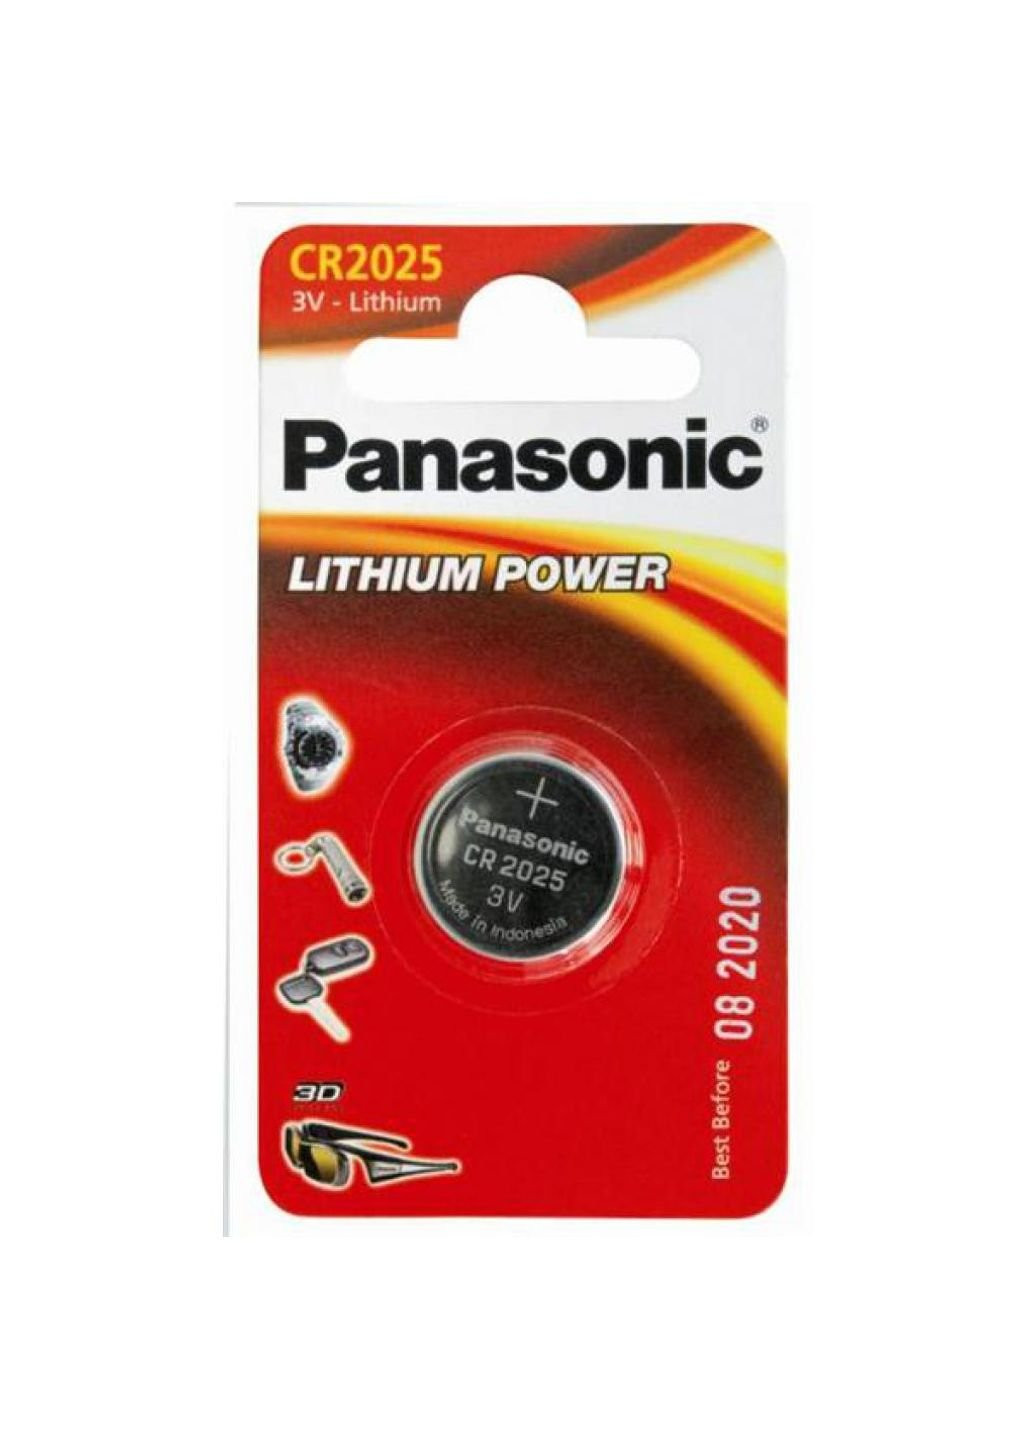 CR 2025 Lithium * 1 батарея (CR-2025EL / 1b) Panasonic (251412060)